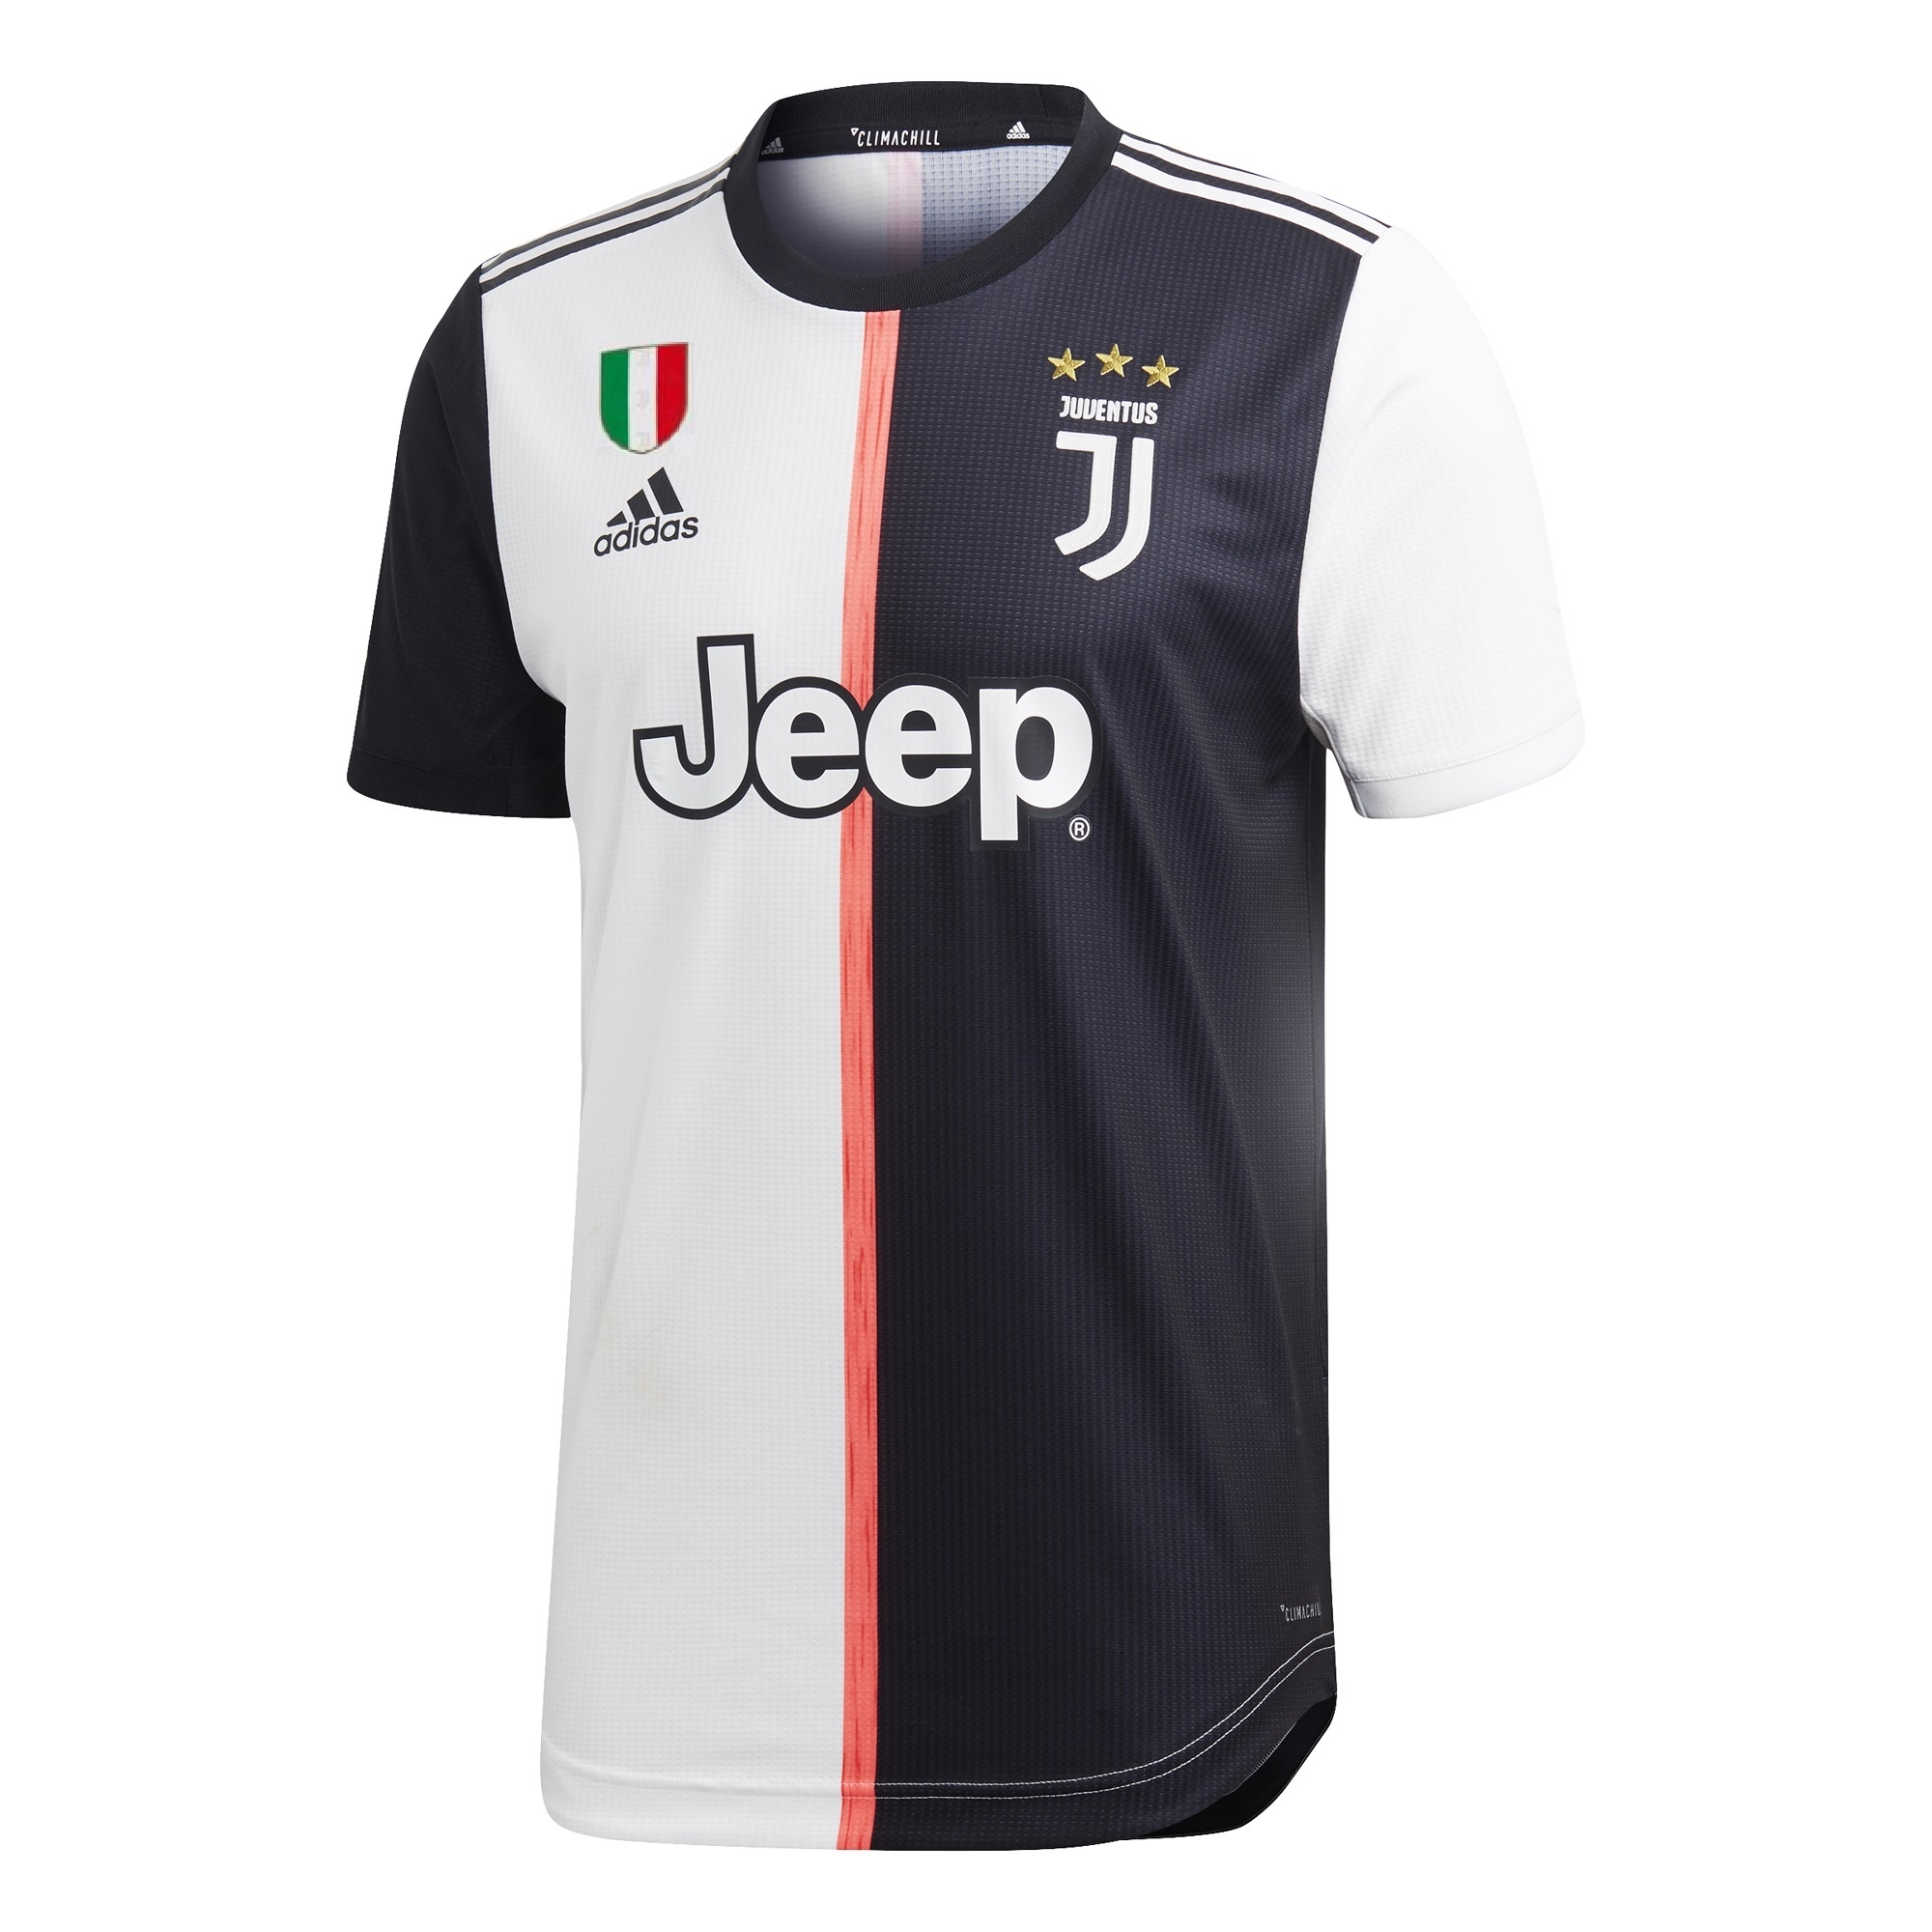 Juventus Pallone Ufficiale Home Capitano Campionato 2019/20 Match Ball 